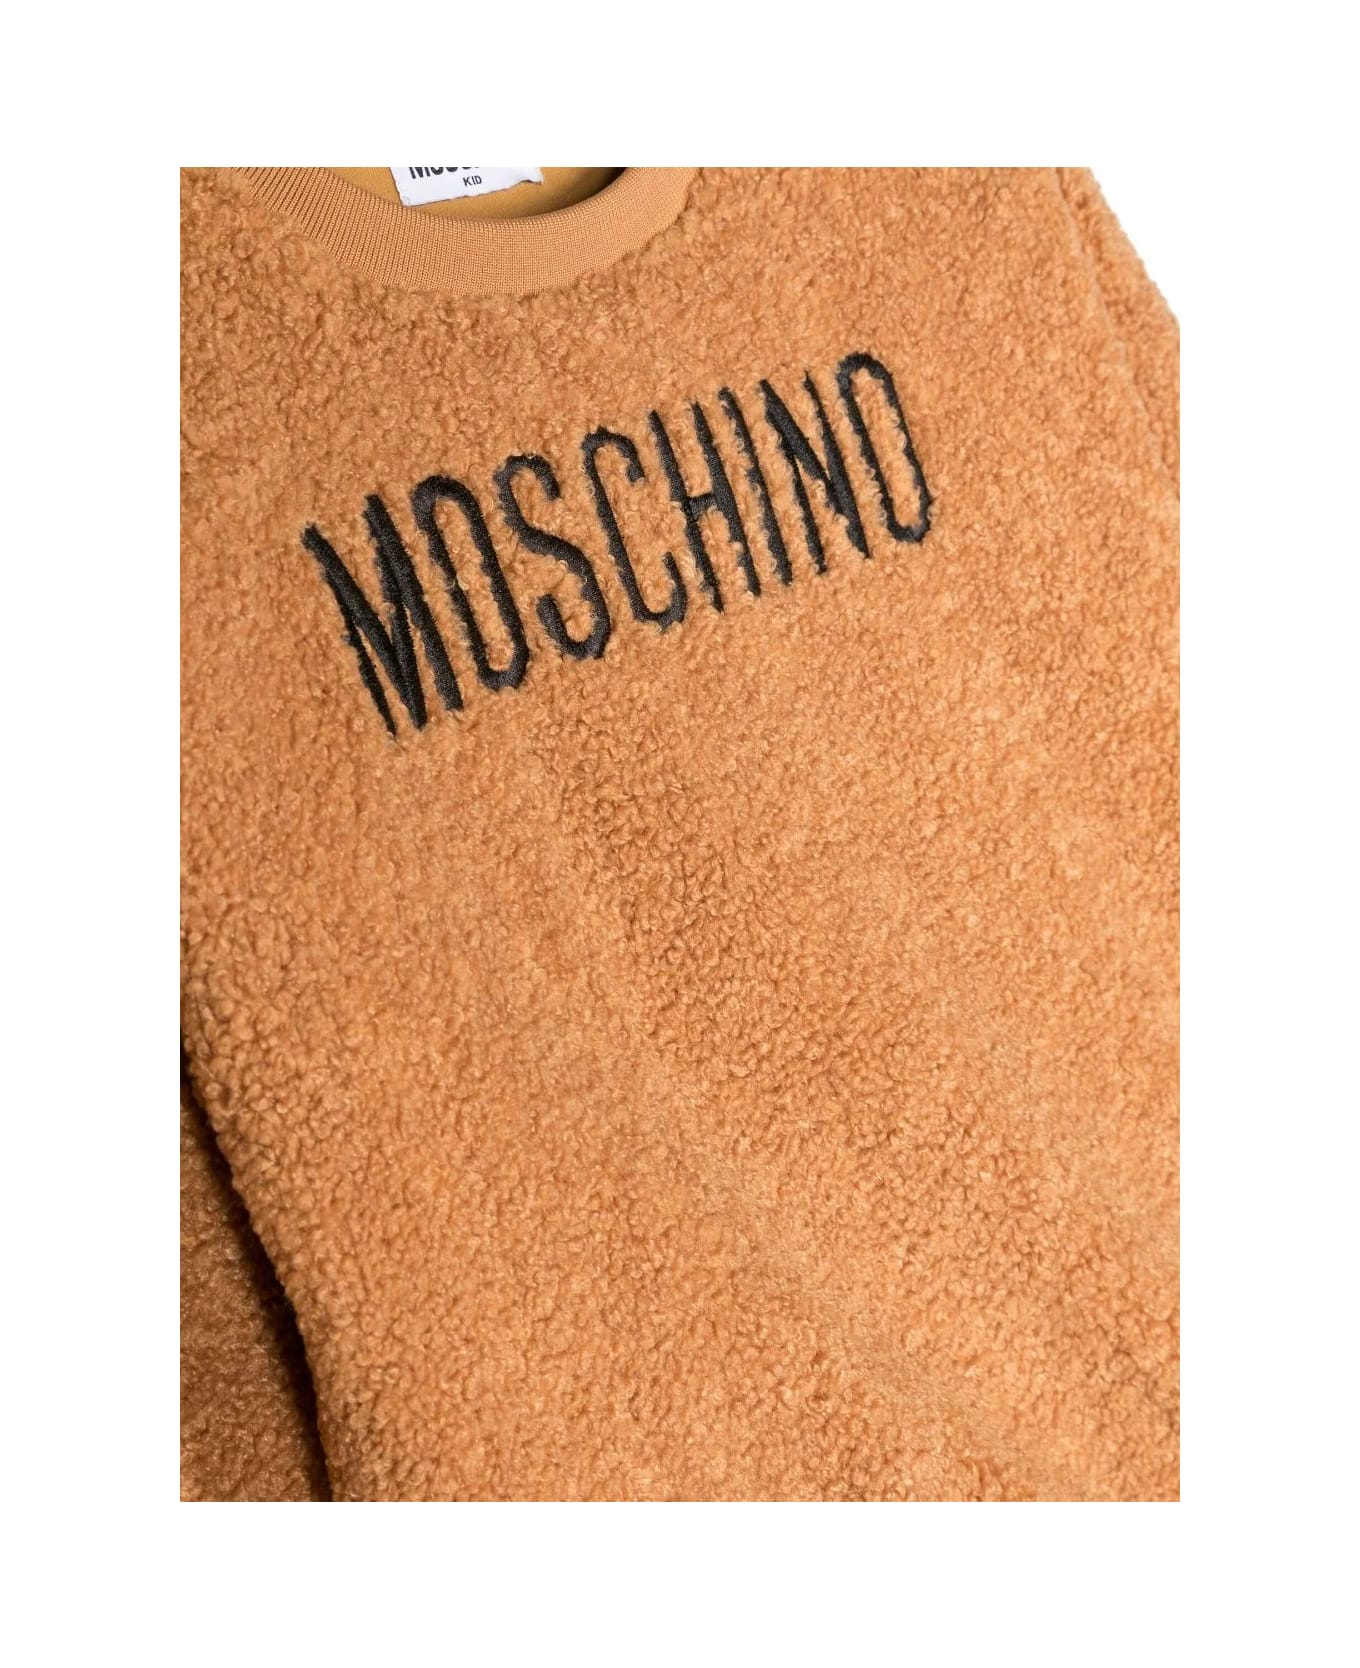 Moschino Teddy Bear Sweatshirt In Caramel Colour - BROWN